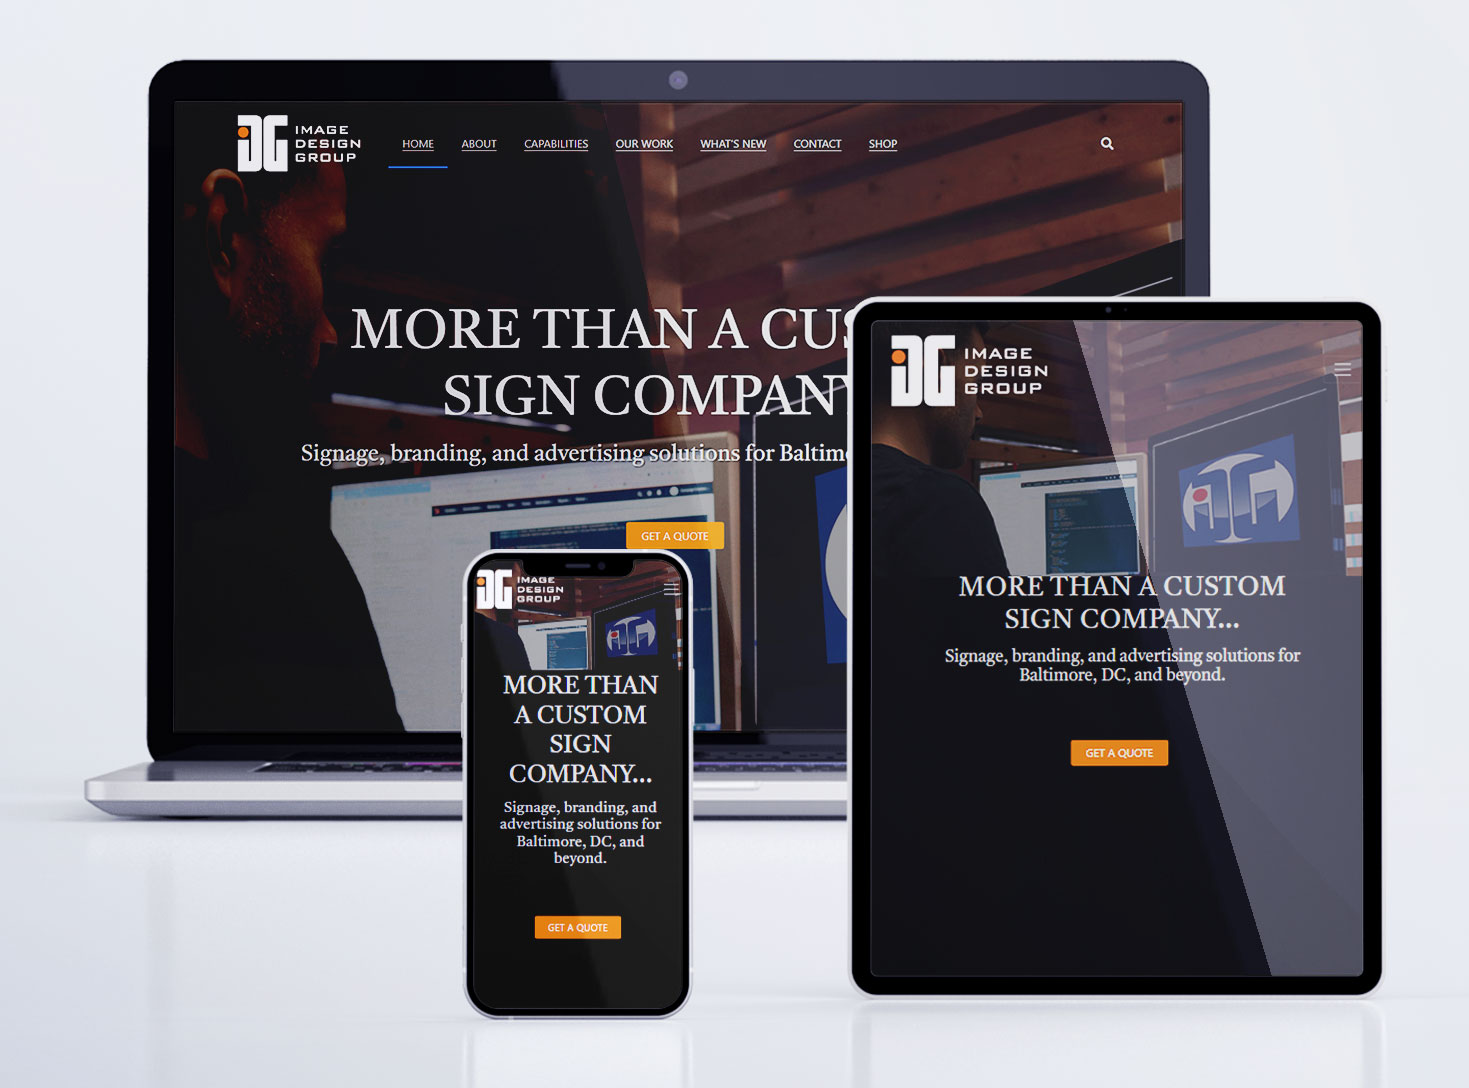 Baltimore Web Design - Image Design Group responsive designed website